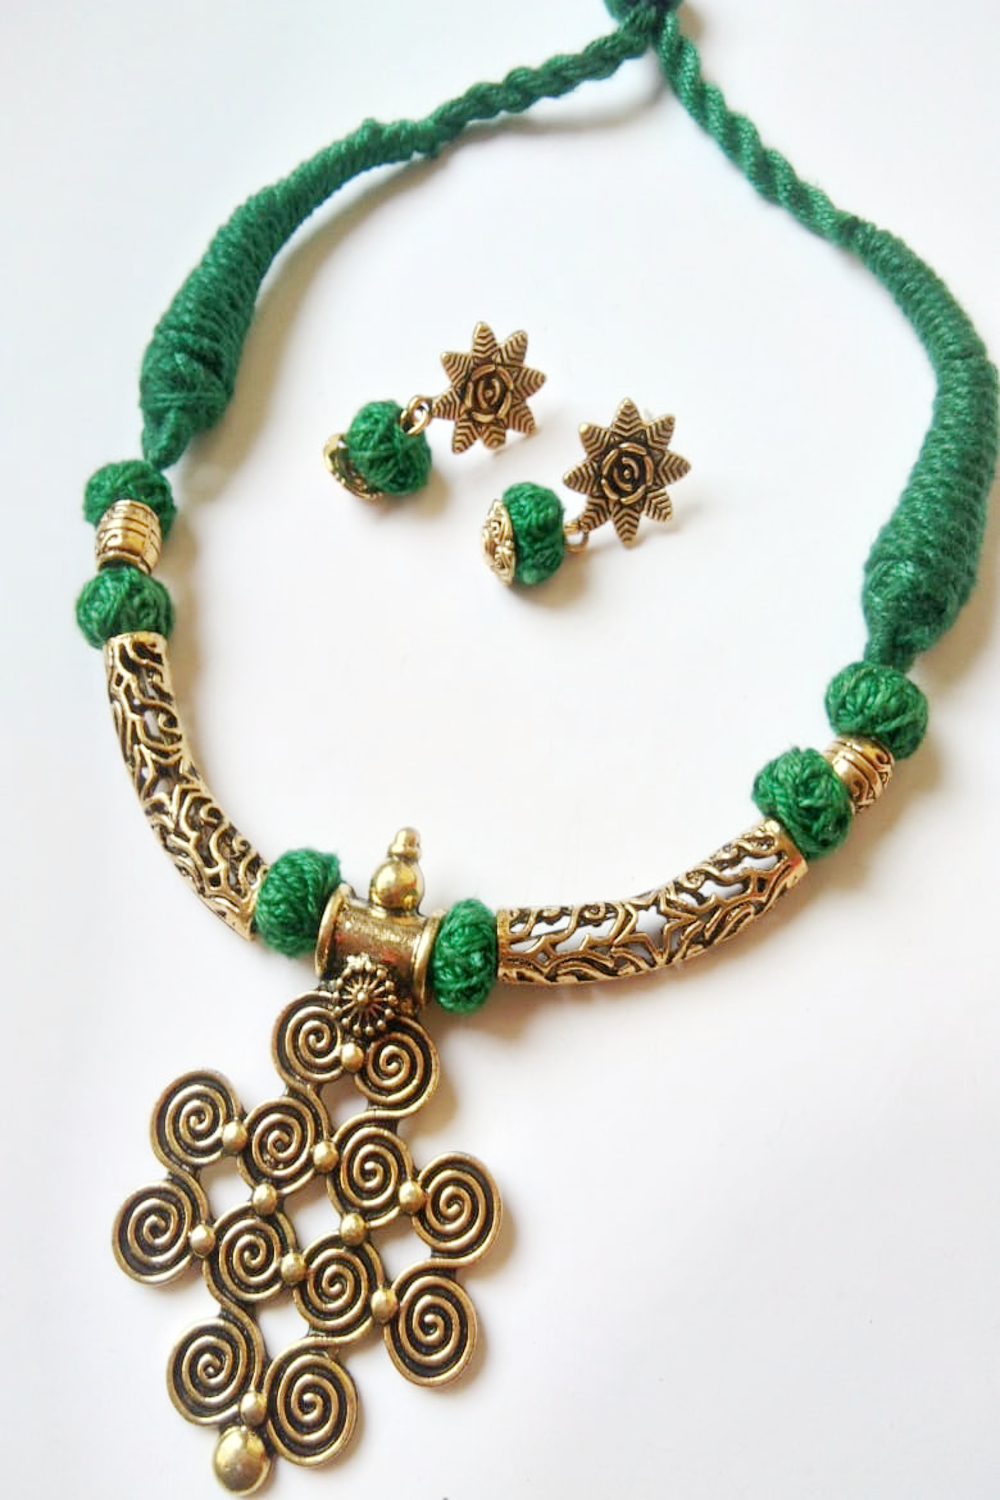 Brass Pendant Threaded Necklace